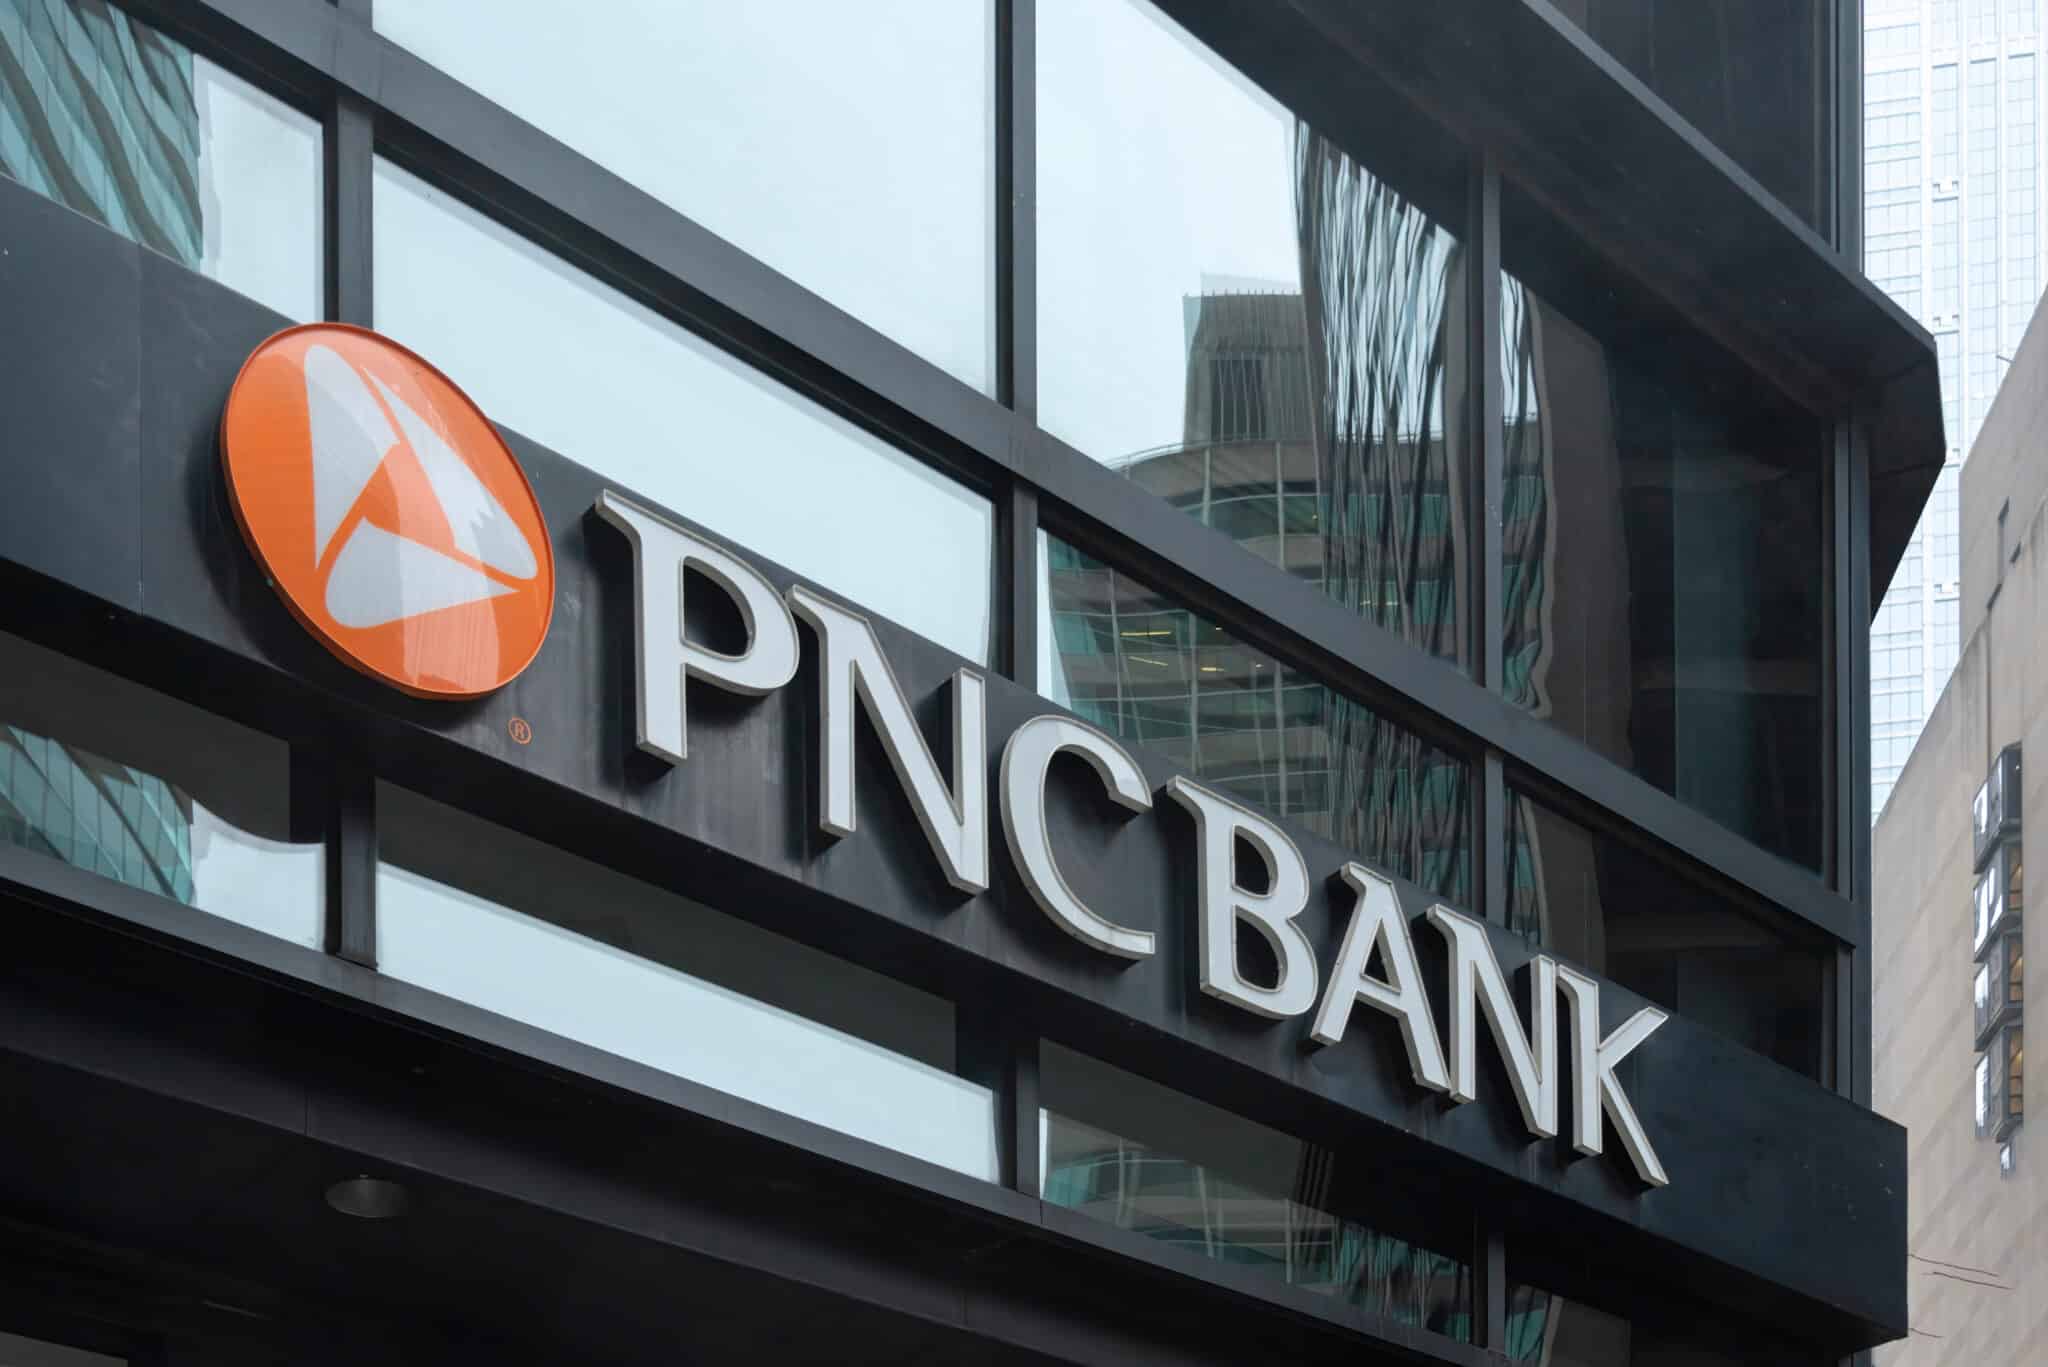 PNC Bank Review